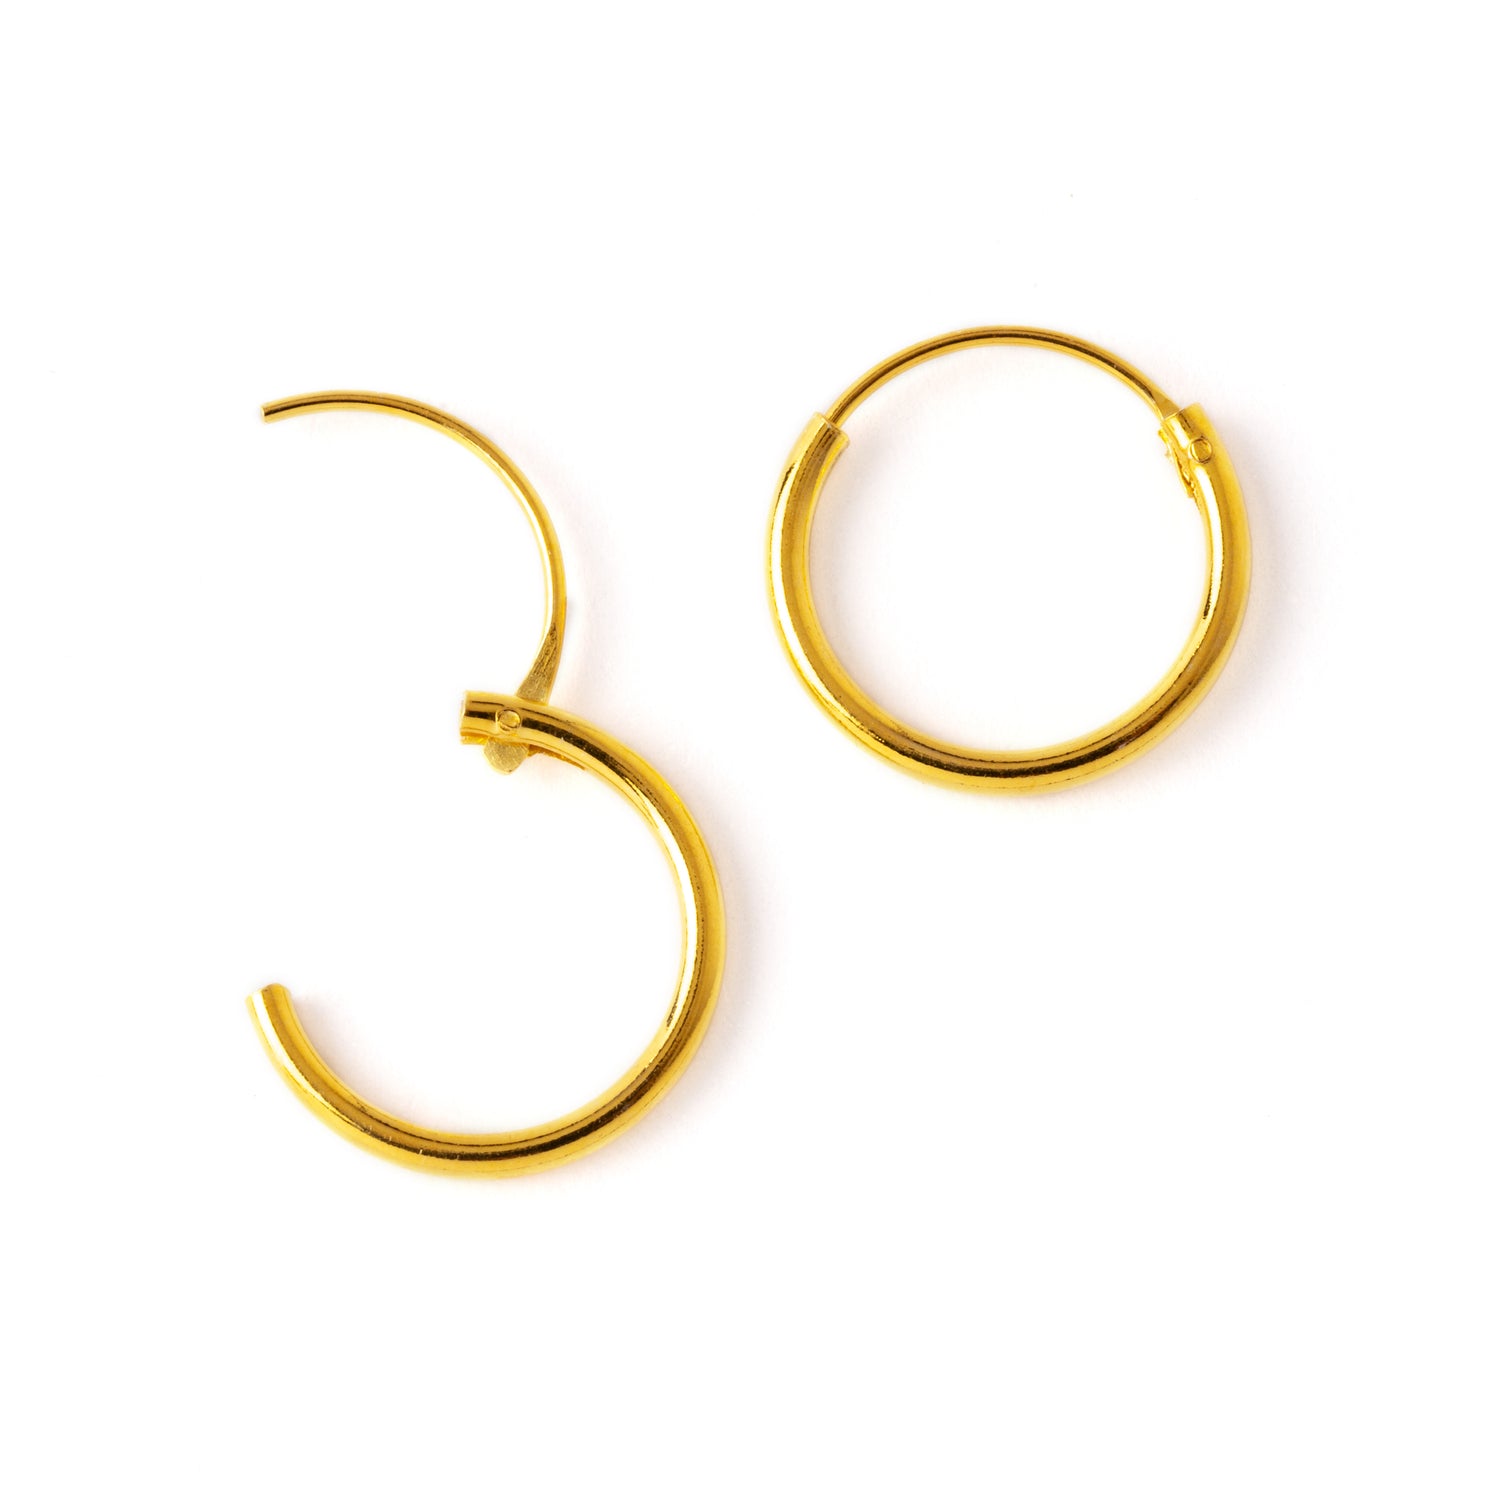 Gold thin hoop earrings open closure view